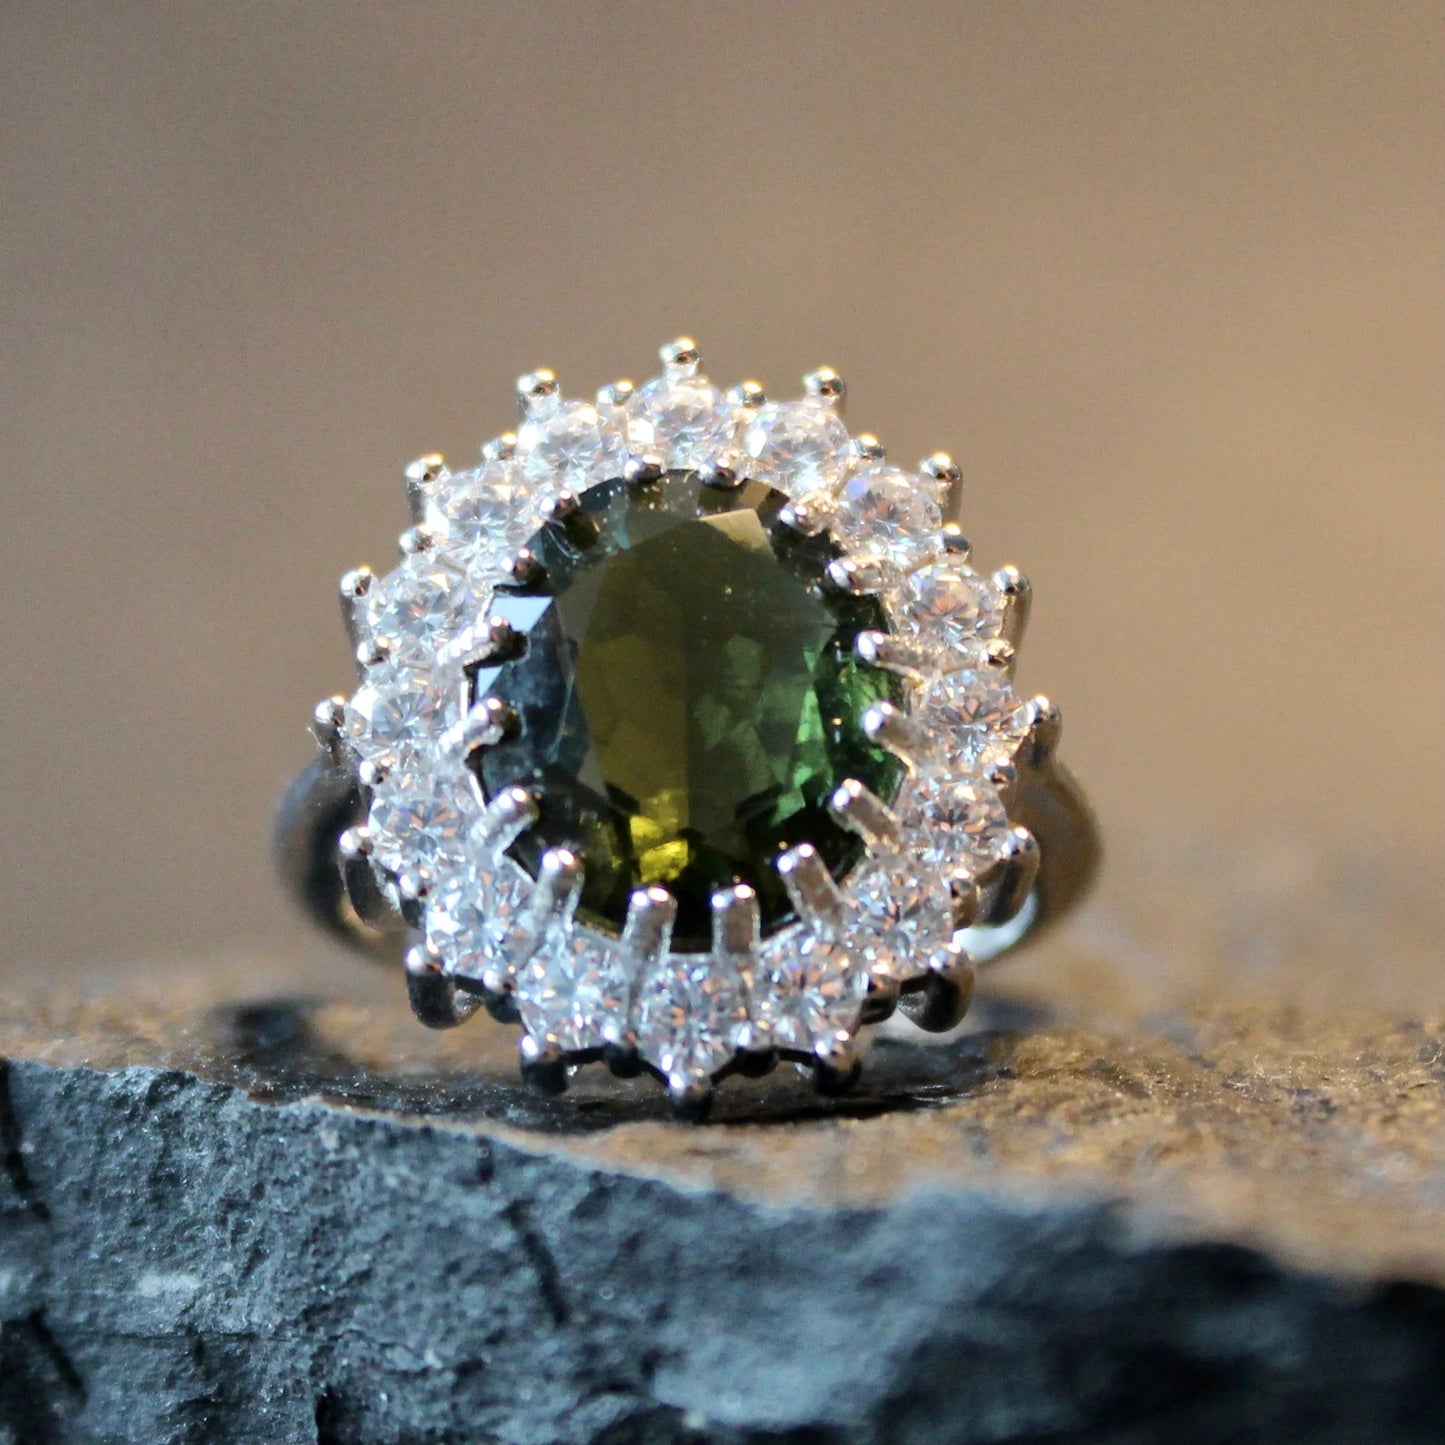 Silver Moldavite Ring 9.5x11.5 mm stone, Authentic Moldavite jewelry- Genuine Moldavite gemstone ring, Faceted moldavite ring real moldavite